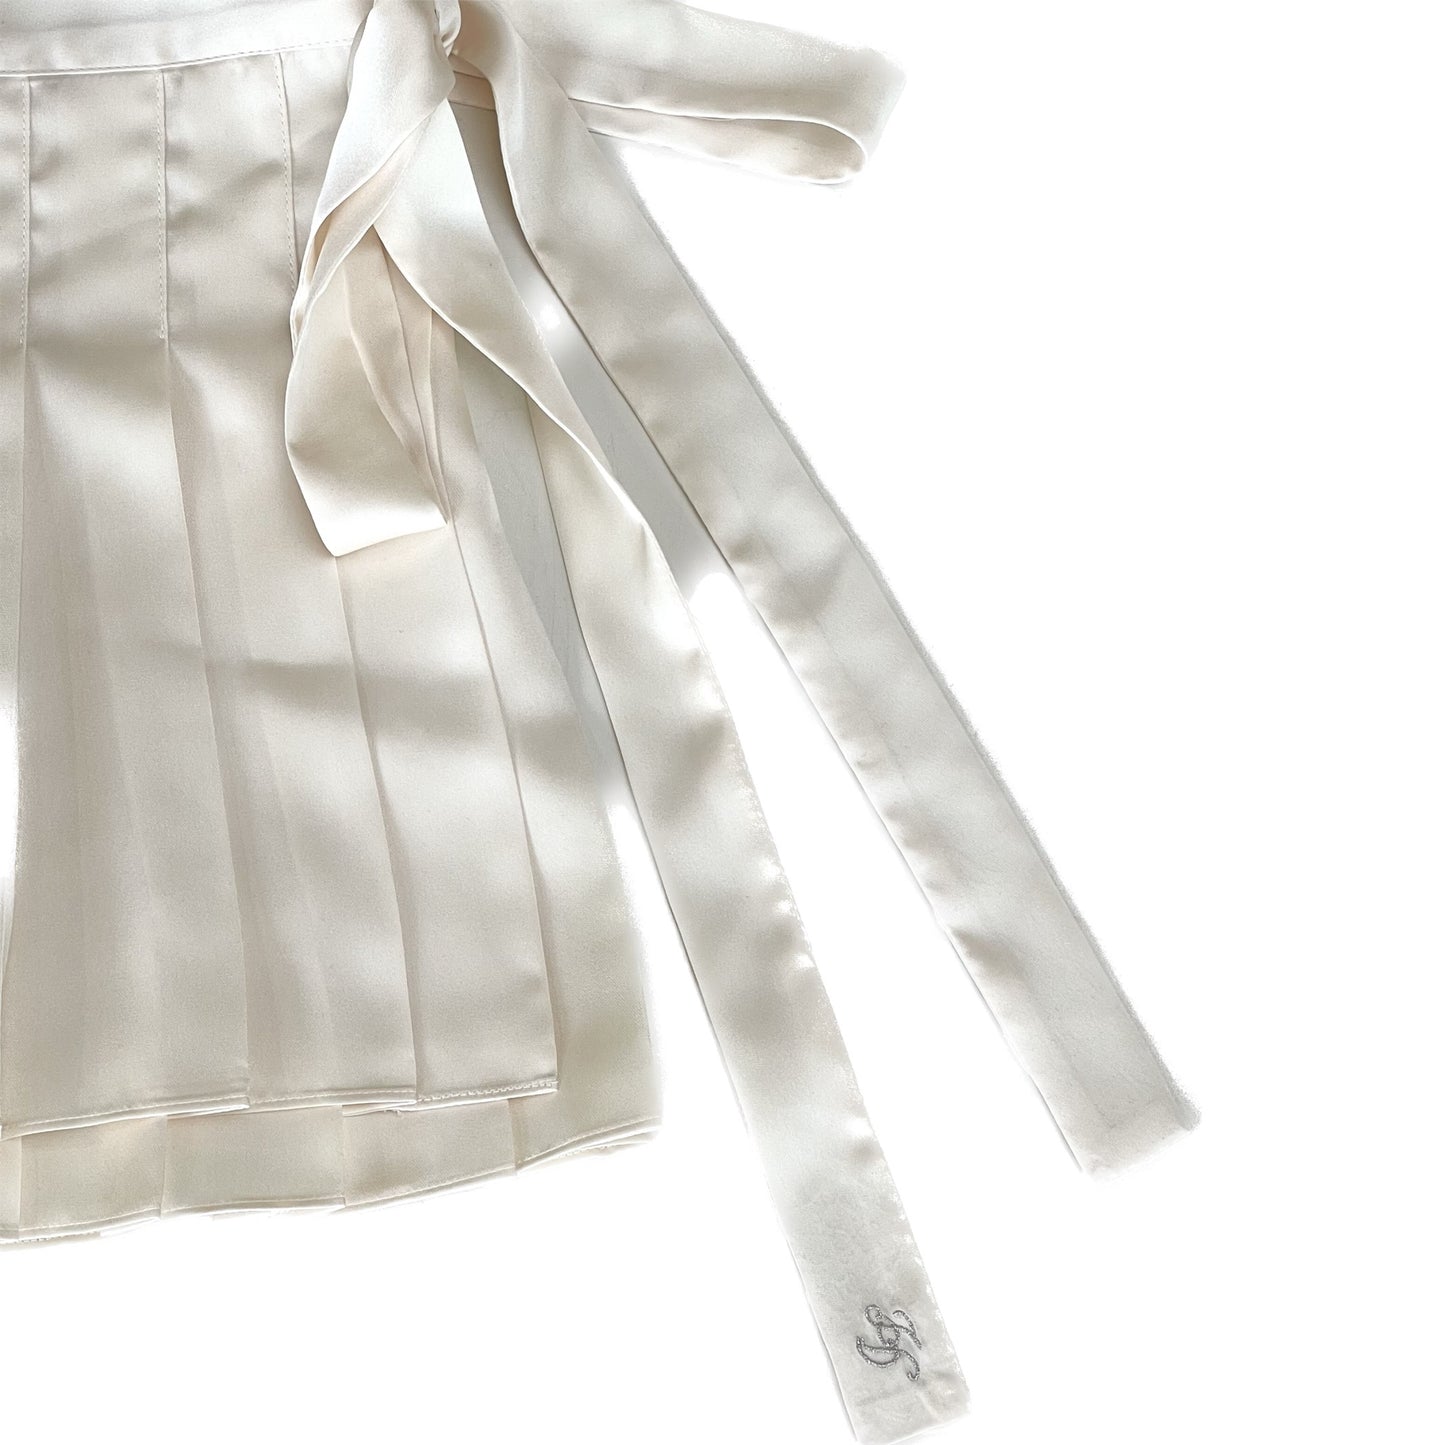 Sher pleats wrap skirt / Cream / ミニラップスカート